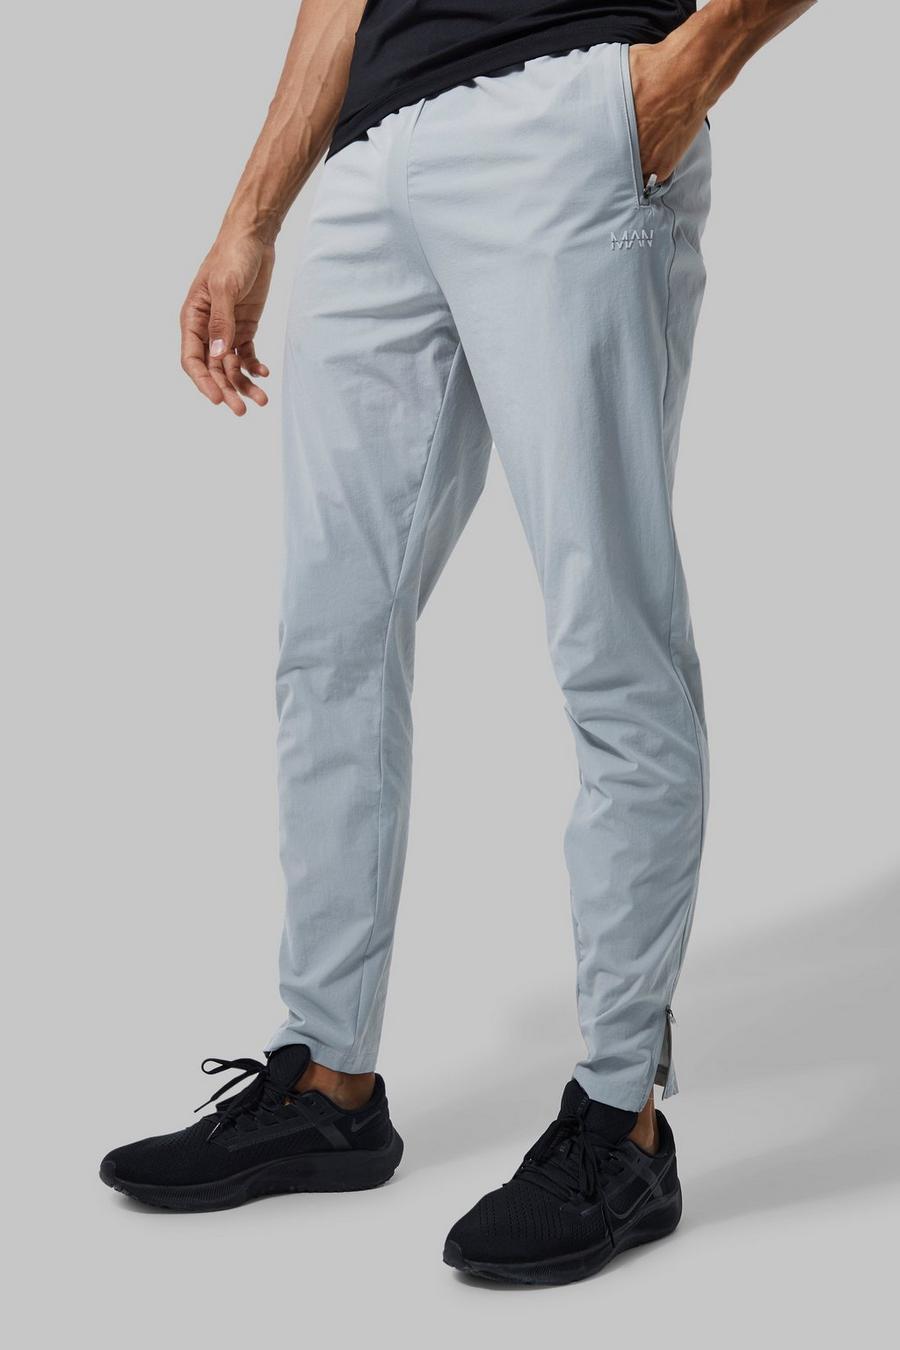 Pantalón deportivo Tall MAN Active ligero resistente, Light grey grigio image number 1